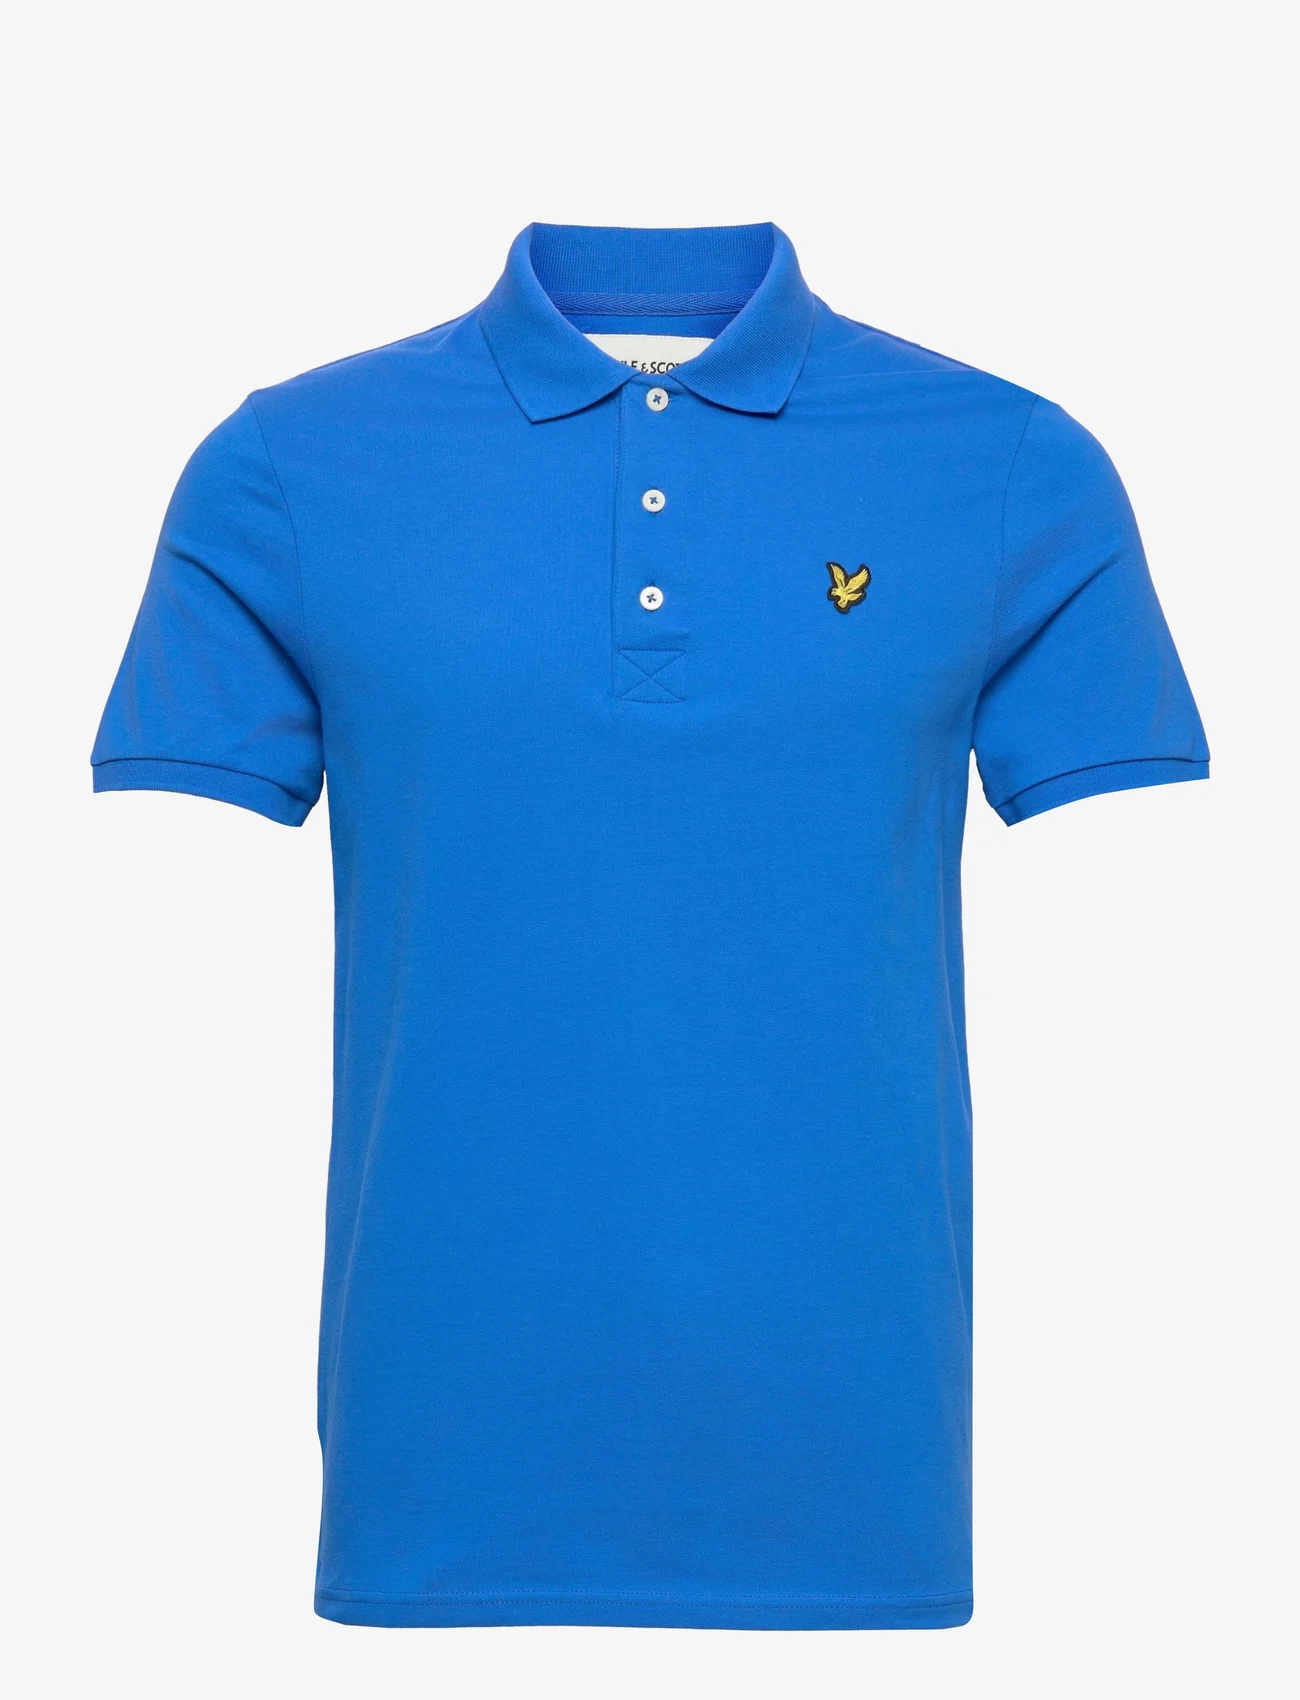 Lyle & Scott - Plain Polo Shirt - kortärmade pikéer - bright blue - 0